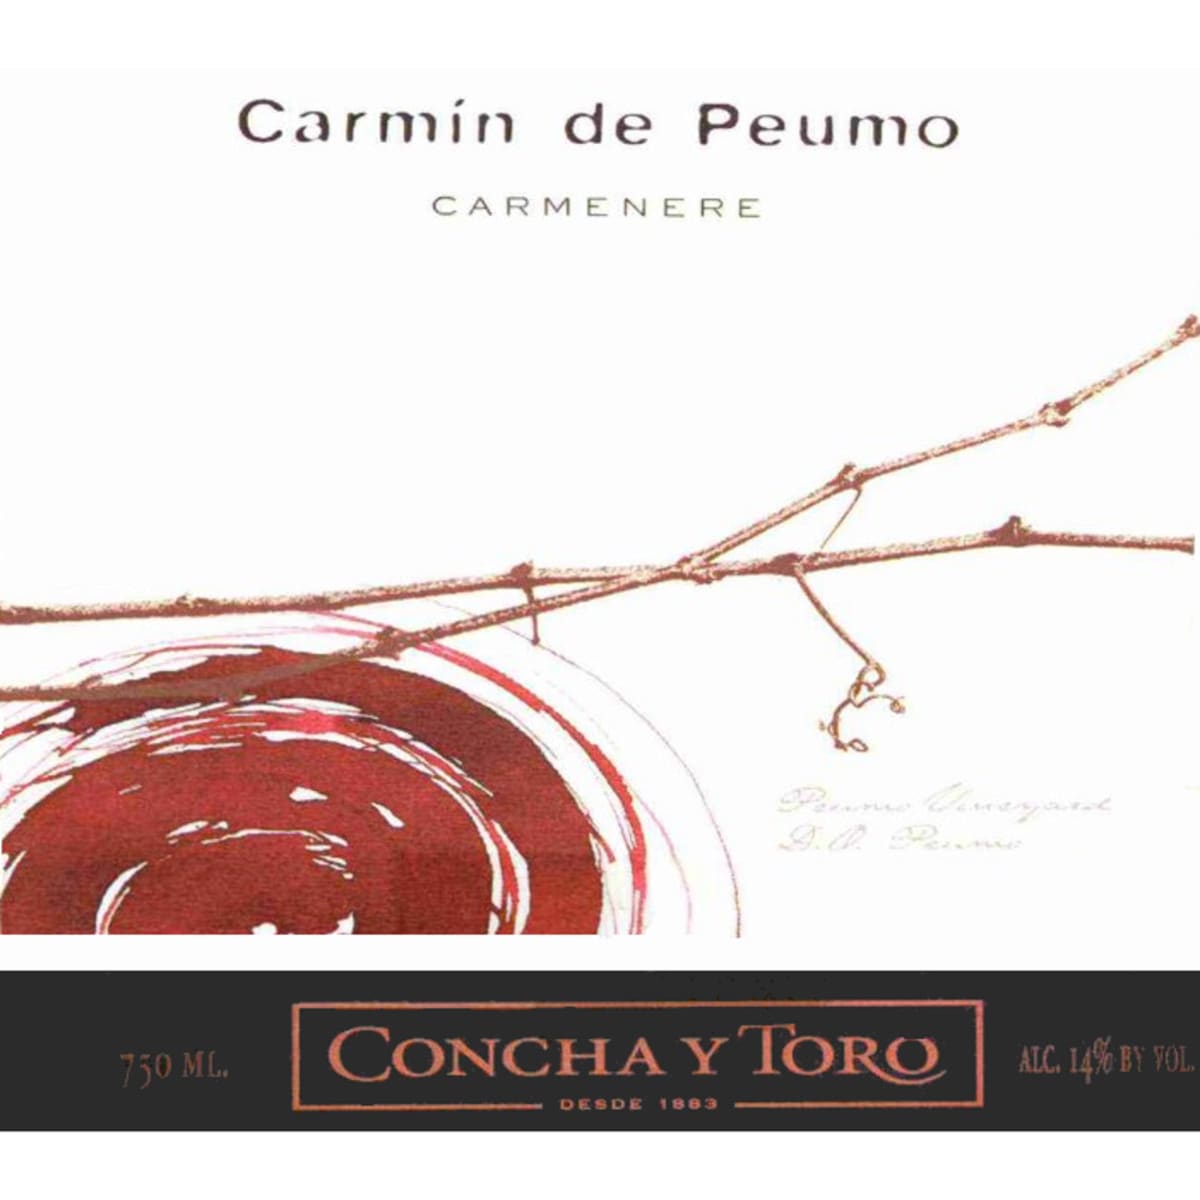 Concha y Toro Carmin de Peumo Carmenere 2005 Front Label